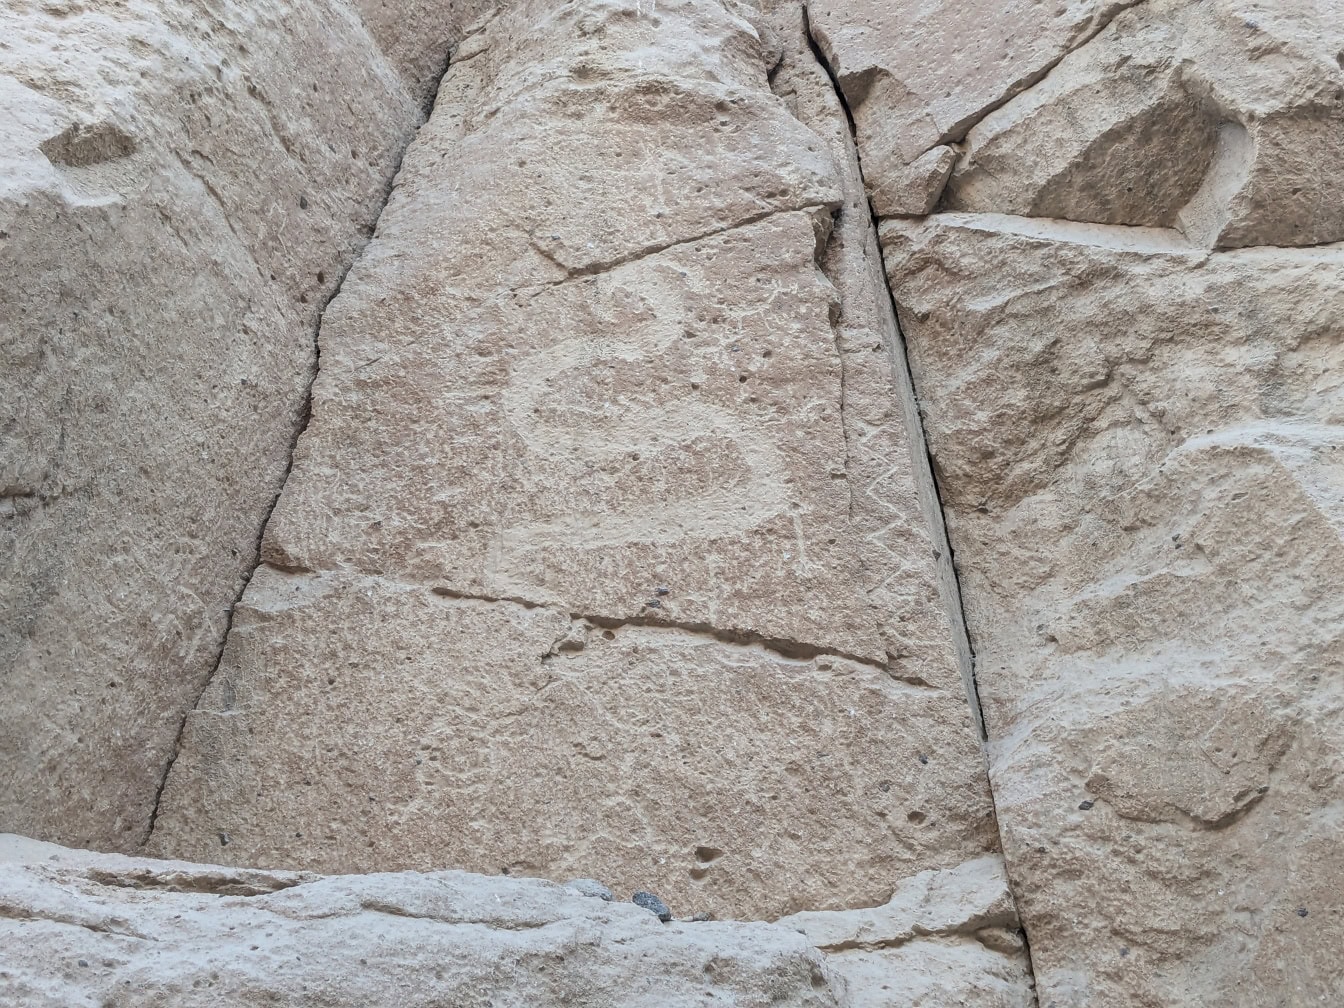 En helleristning hugget i stein som viser et dyr som ligner en slange eller drage, en steinalderkunst funnet i Peru i Sør-Amerika